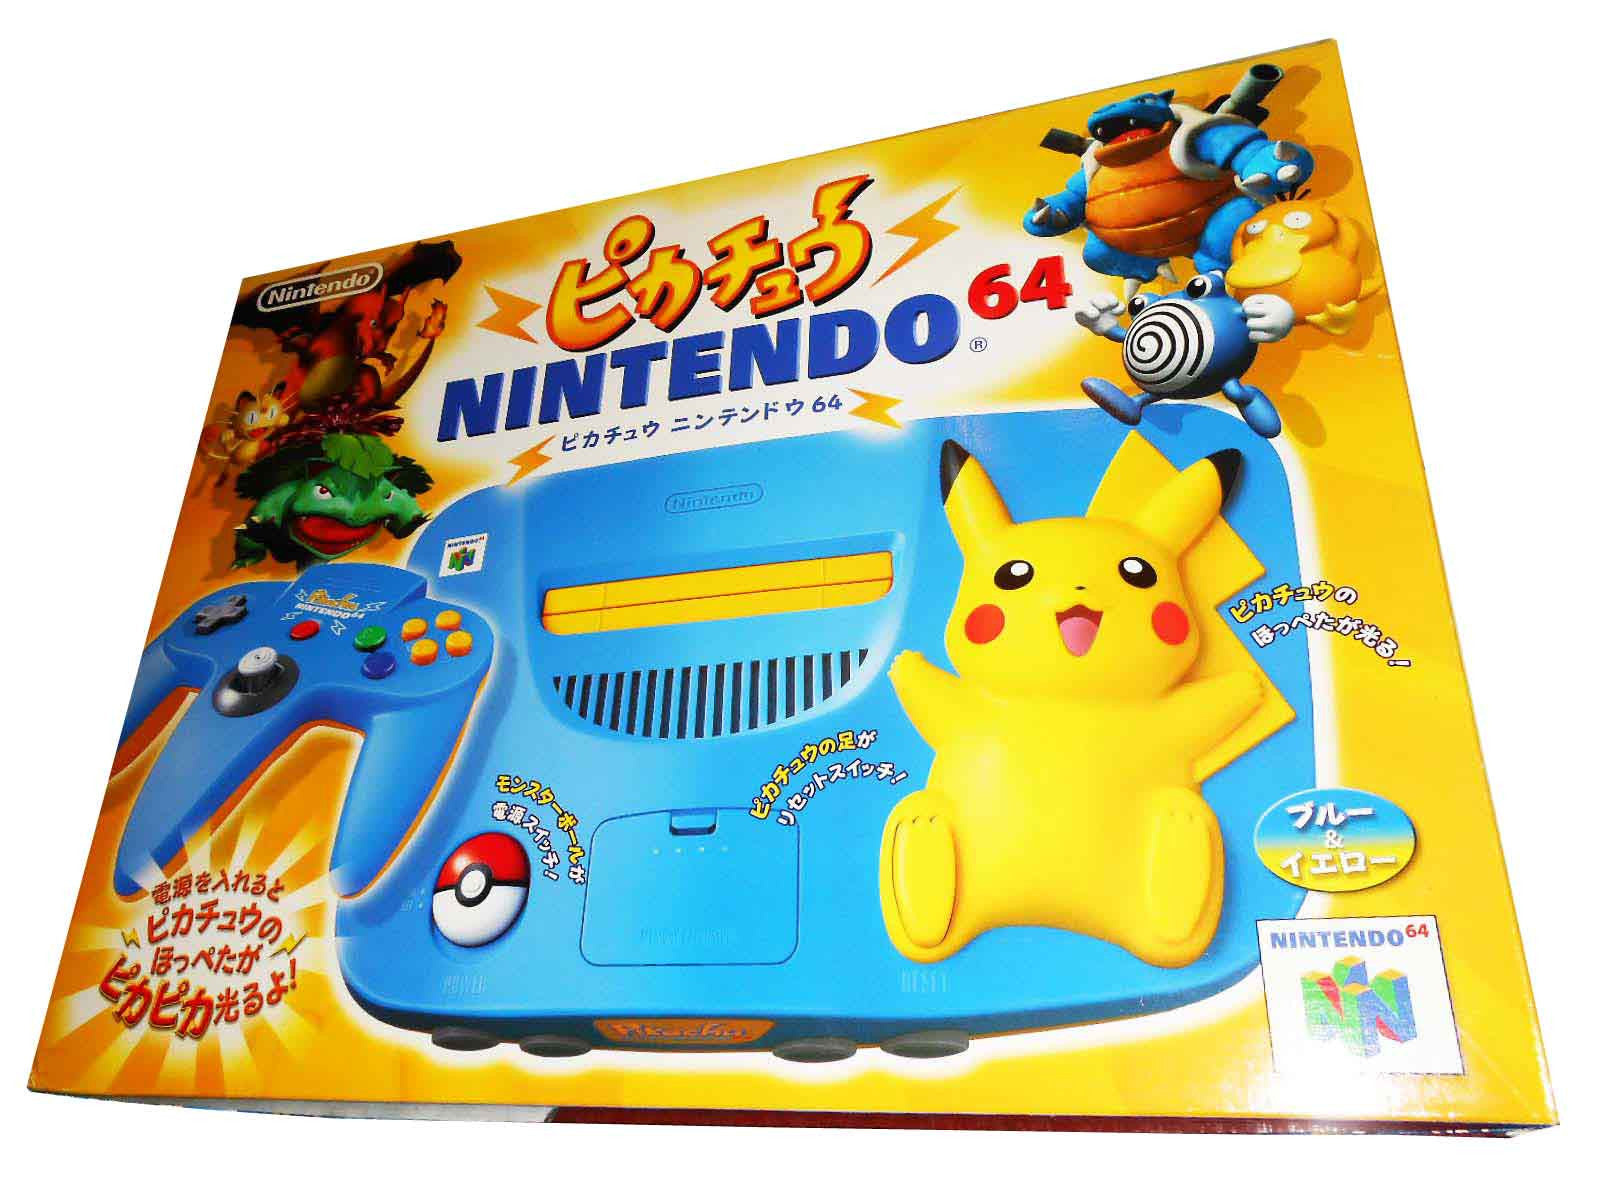 Nintendo 64 Pikachu Retropixl Retrogaming retro gaming Rare Console Collector Limited Edition Japan Import